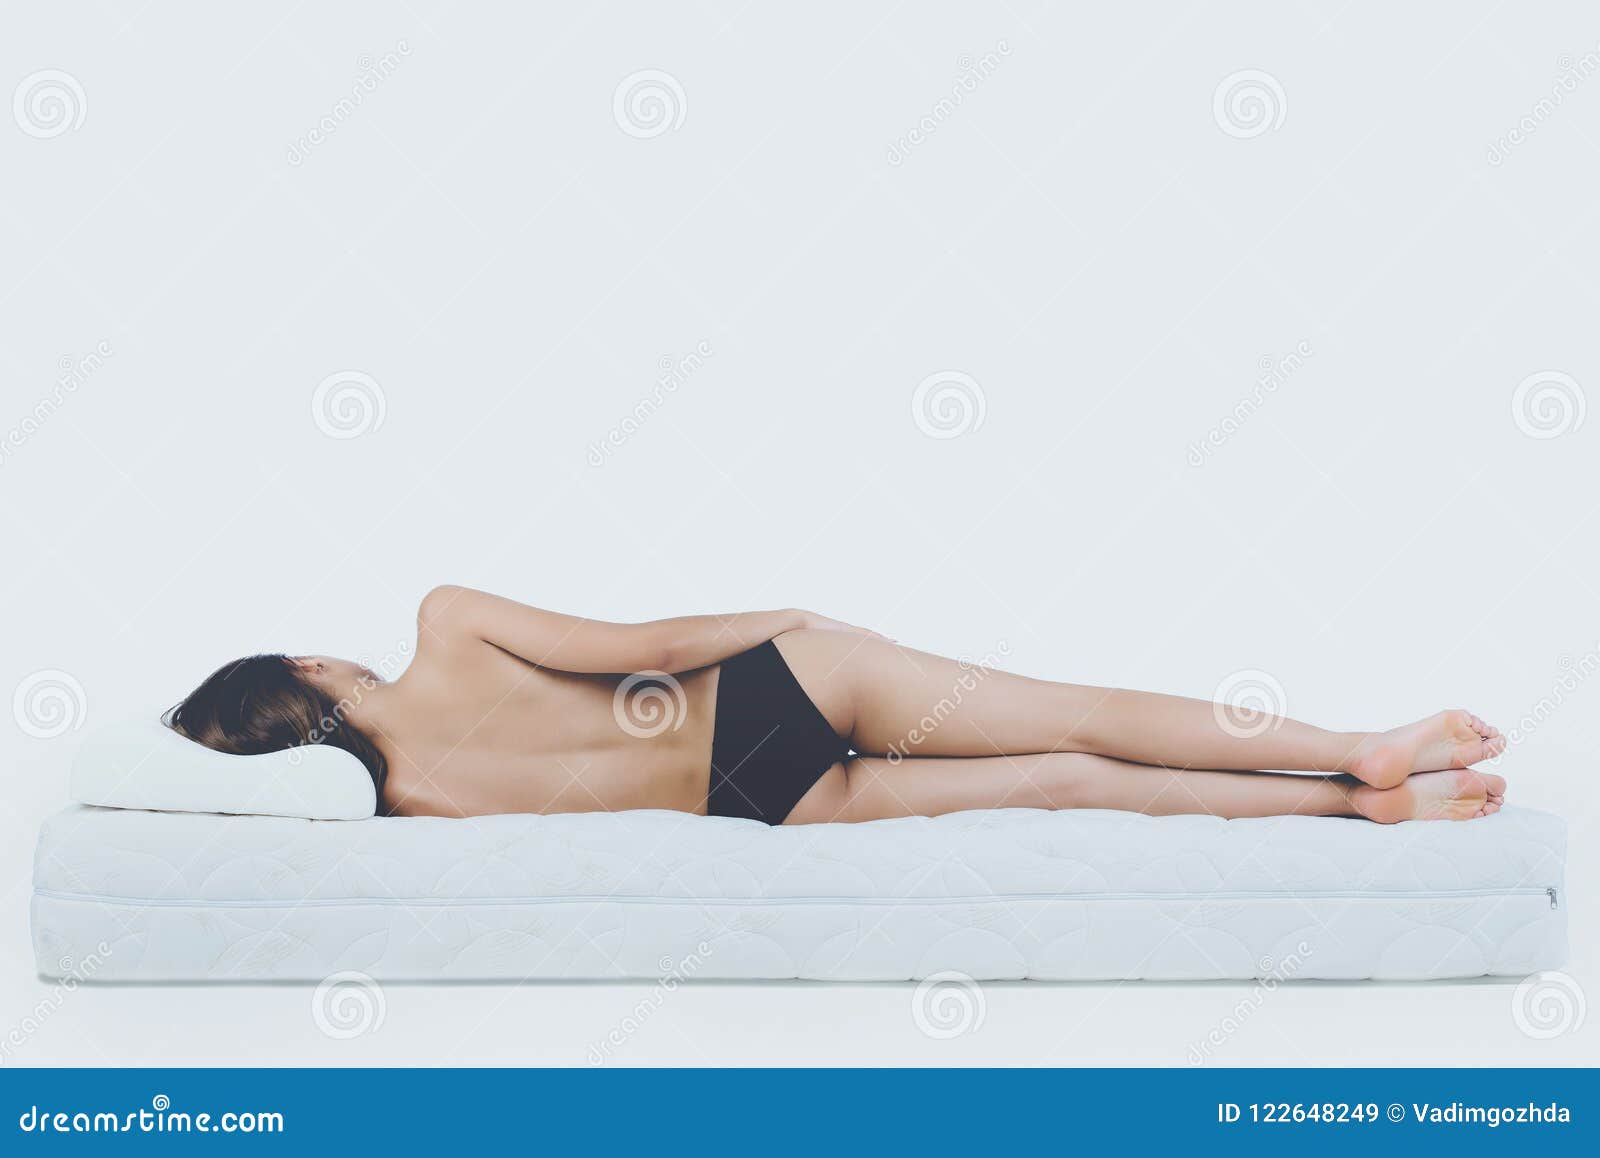 young bare woman lying on orthopedic mattress